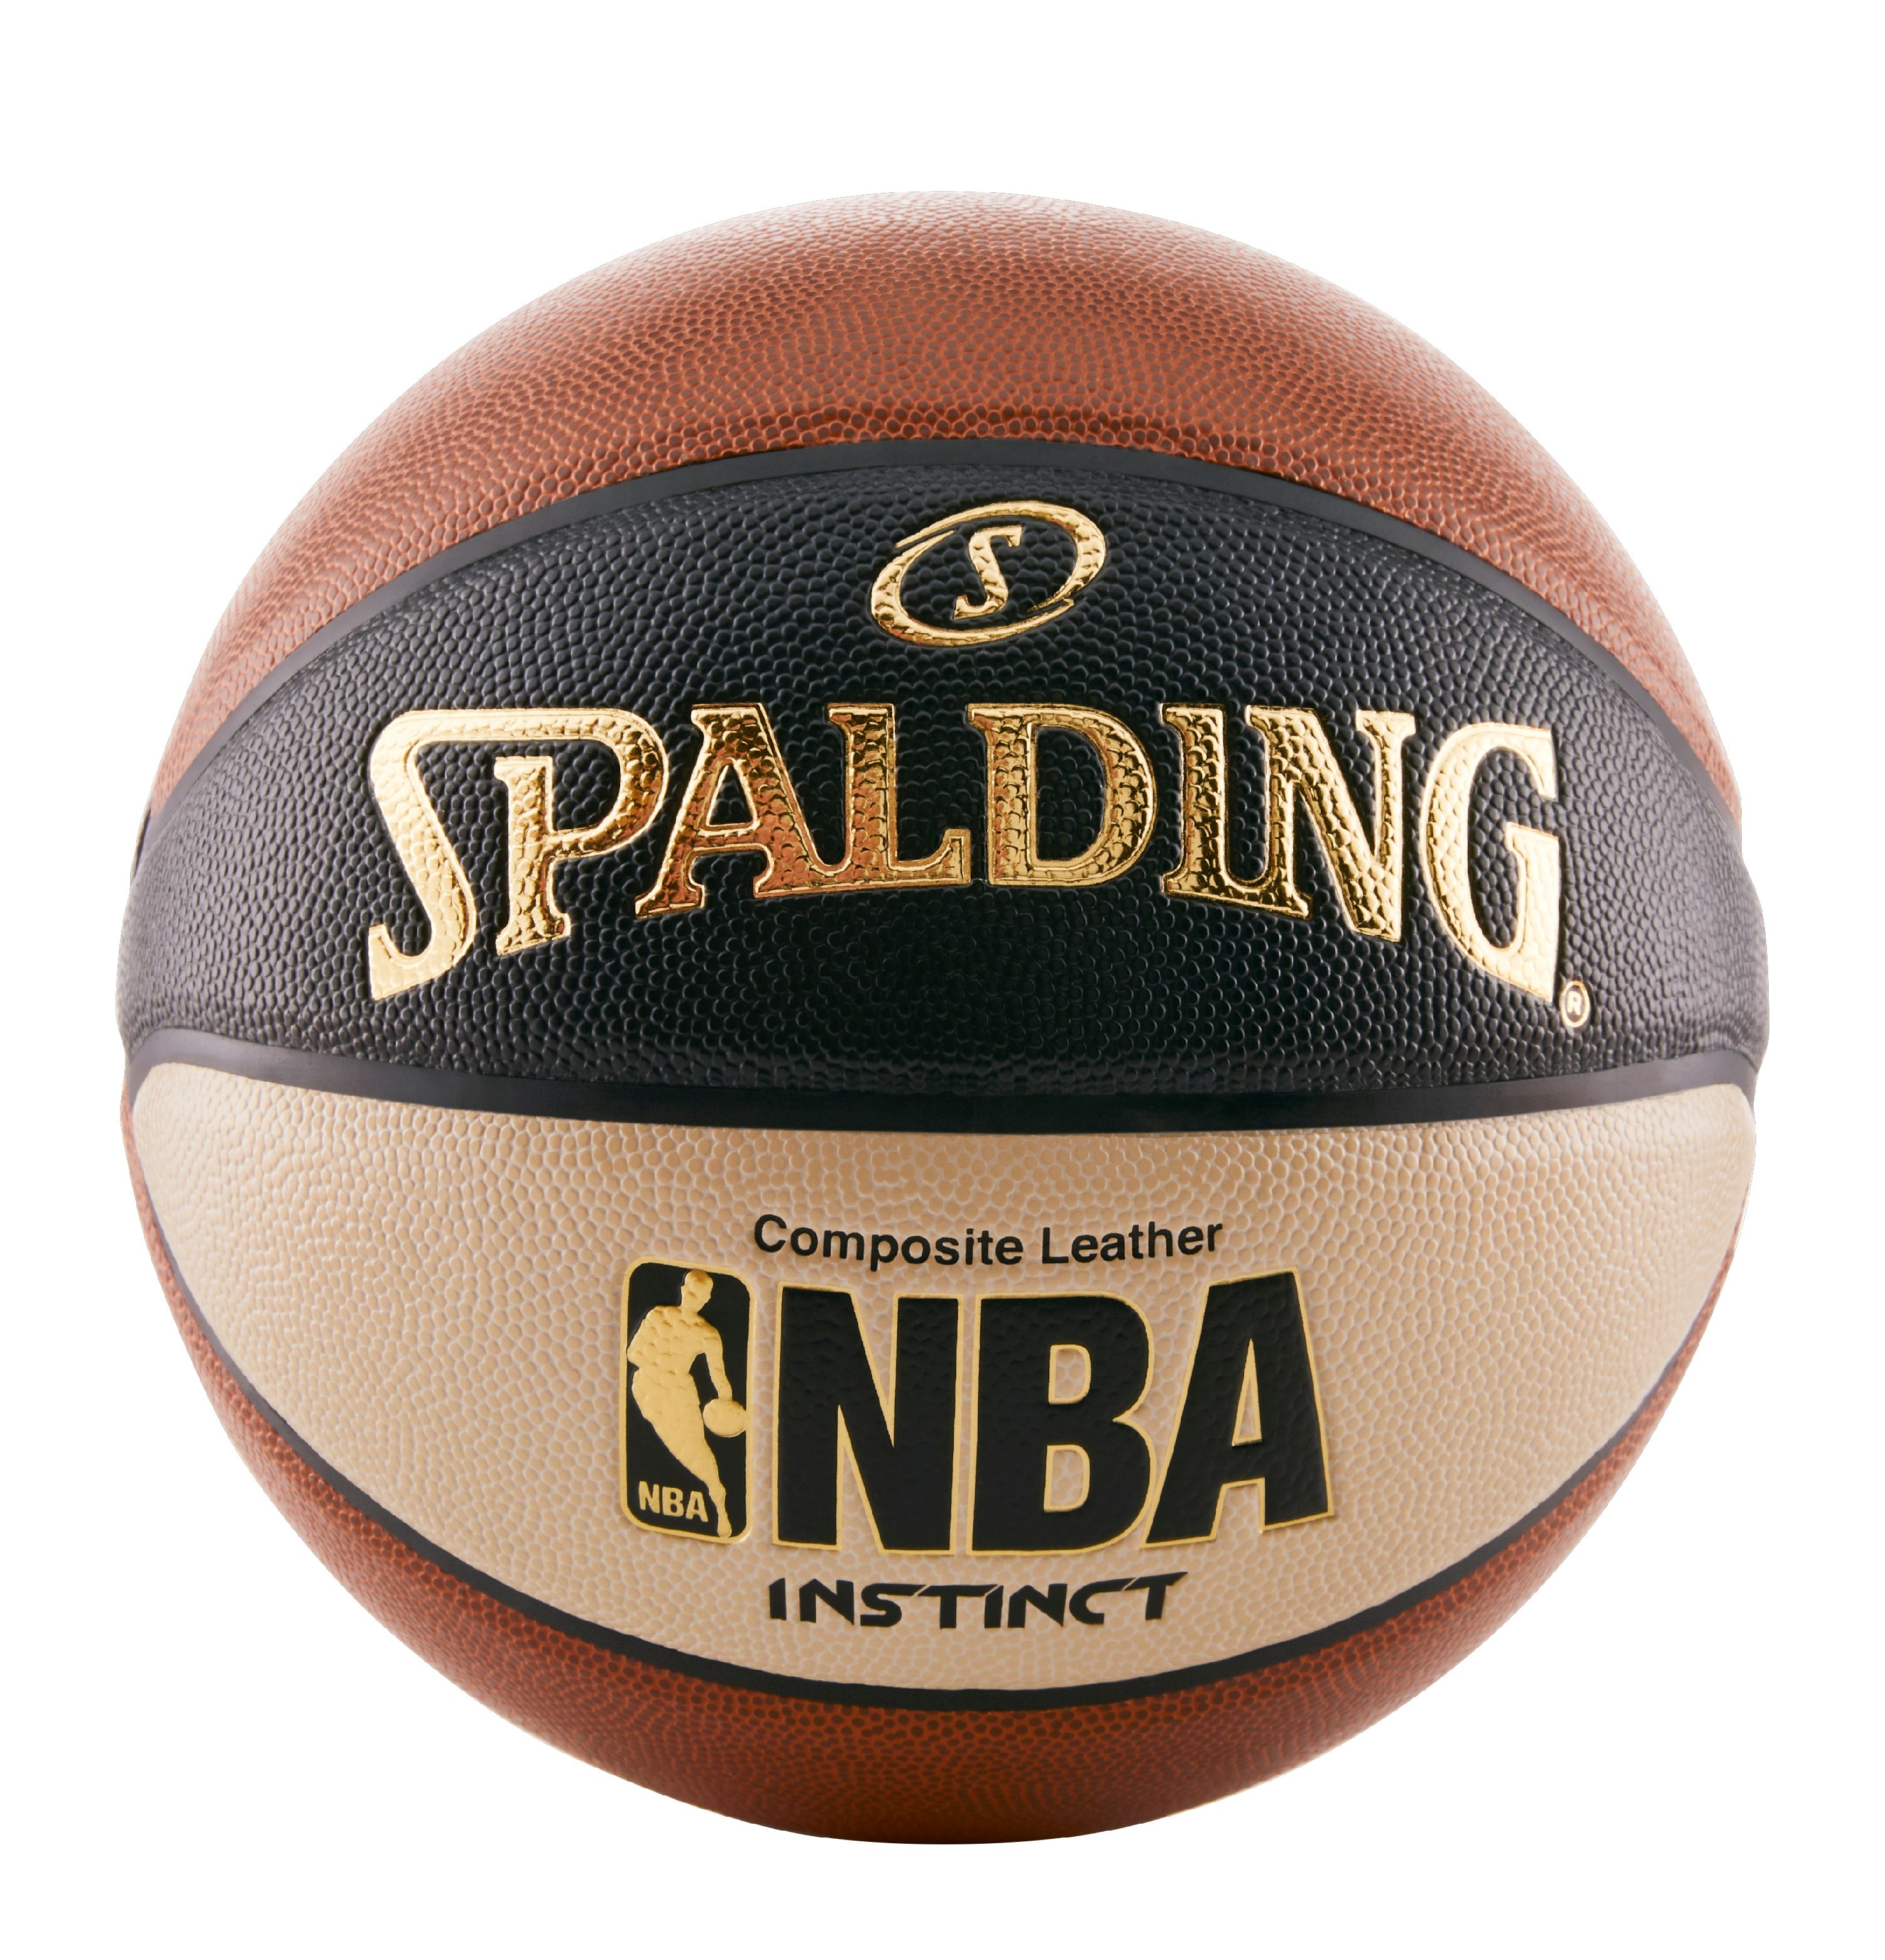 Spalding NBA Instinct 29.5" Basketball - image 1 of 4